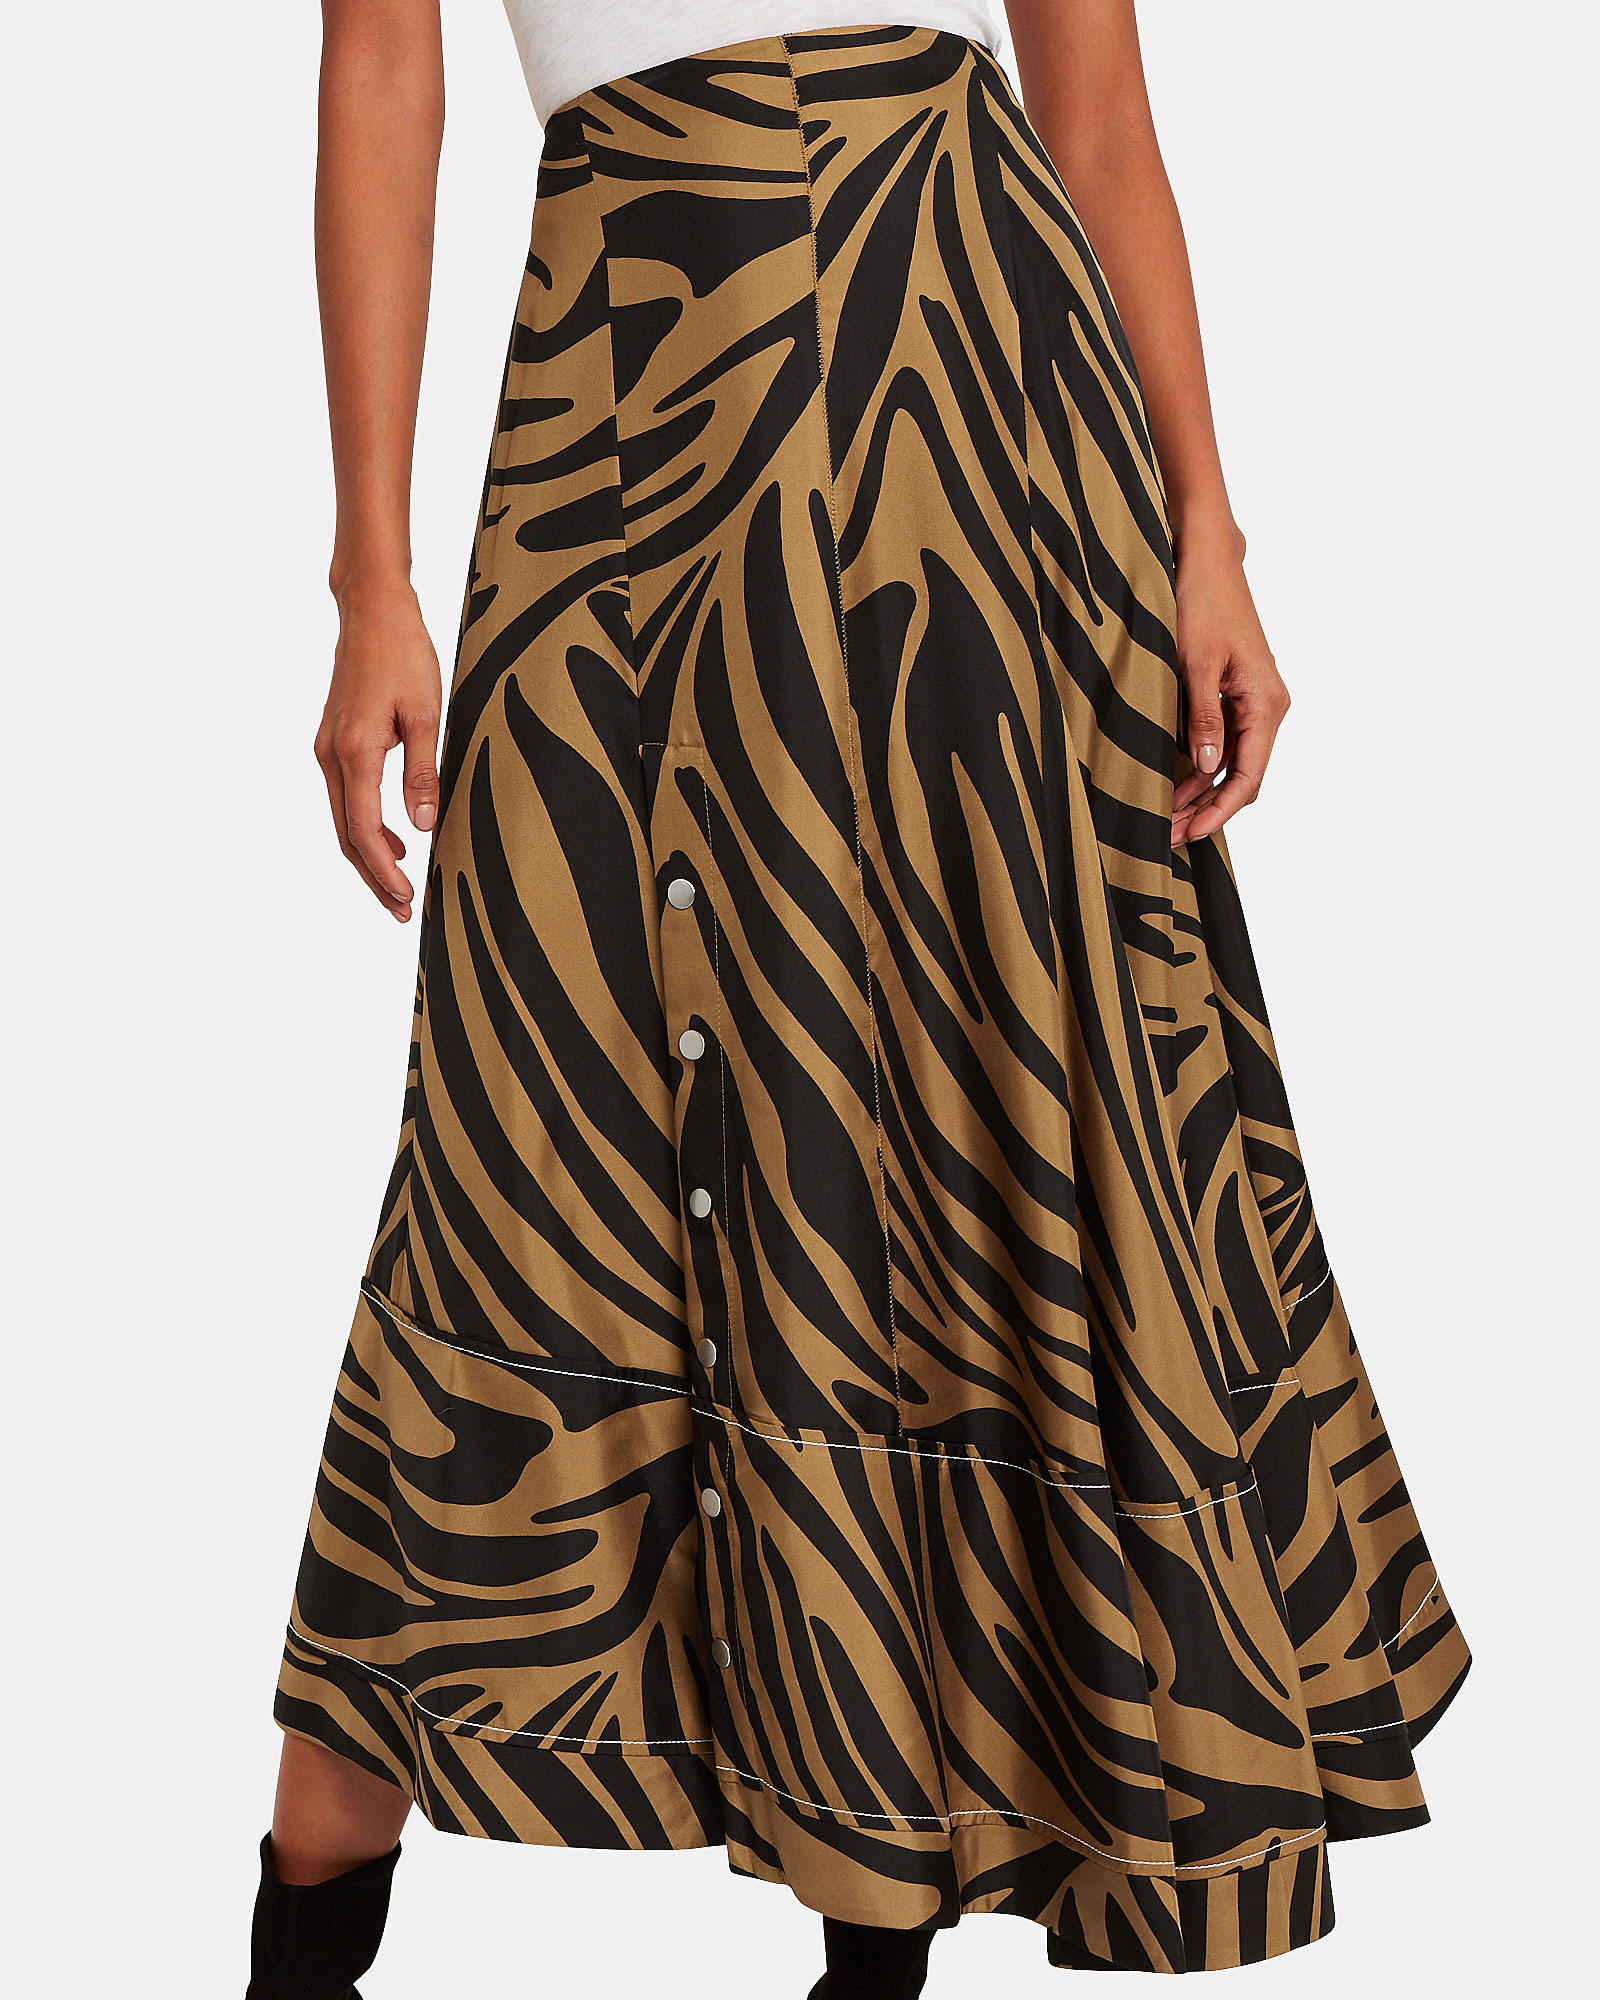 3.1 Phillip Lim | Zebra-Printed Silk Skirt | INTERMIX®